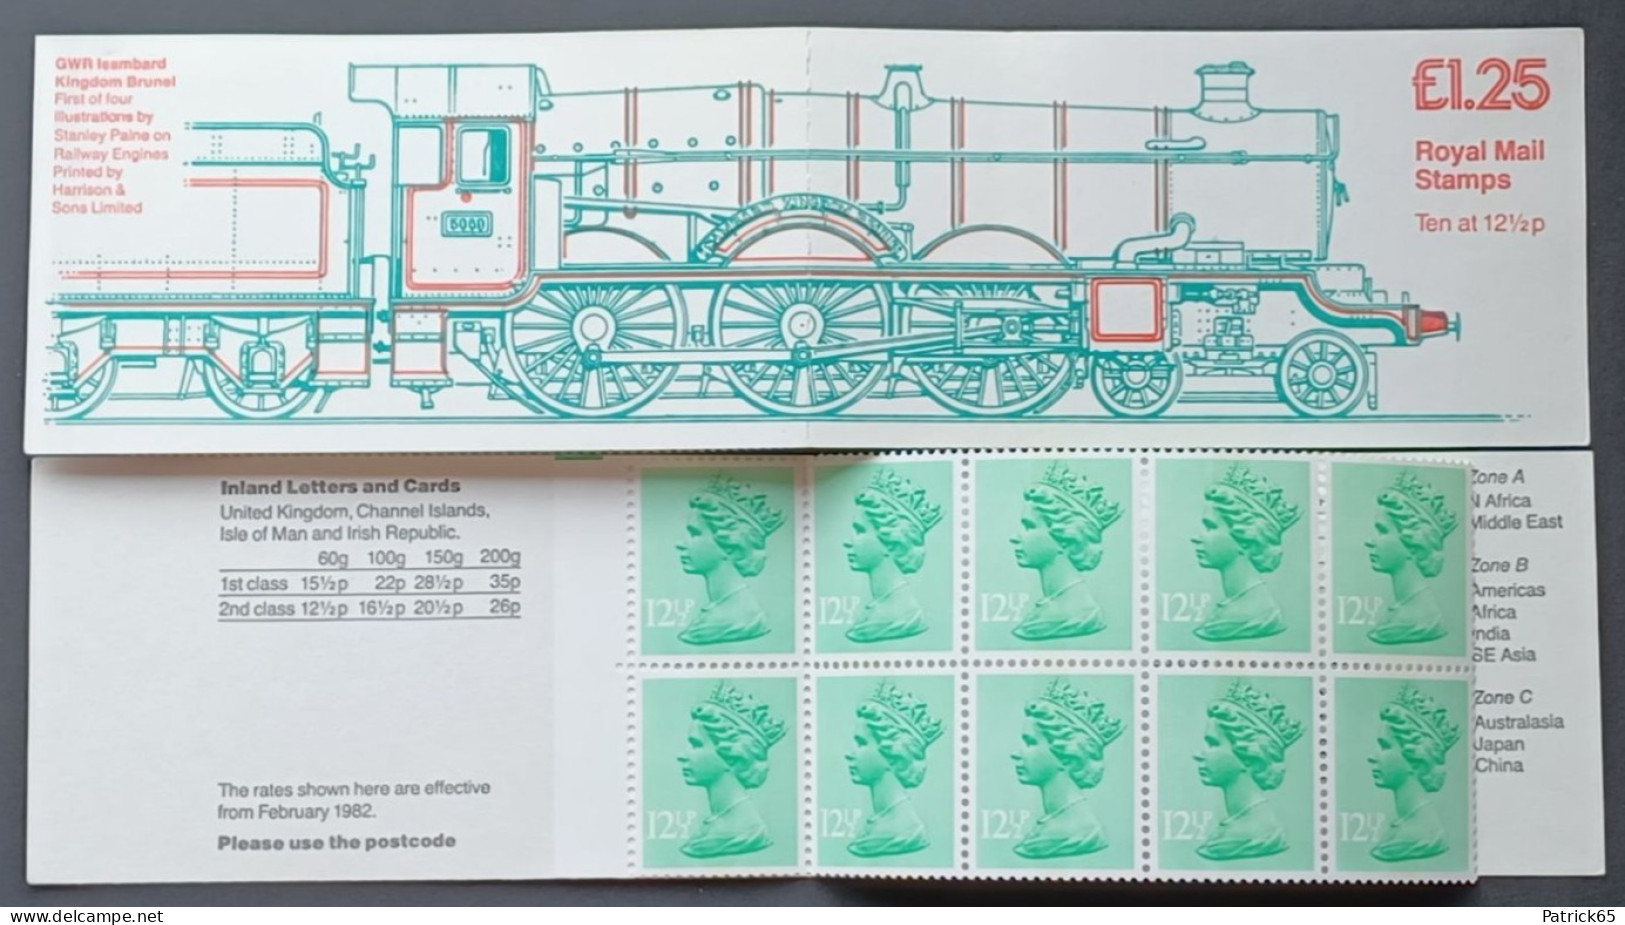 Groot Brittannie 1983 Sg.FK5B - MNH Compleet Boekje GWR Isambard Kingdom Brunei 1/4 - Libretti